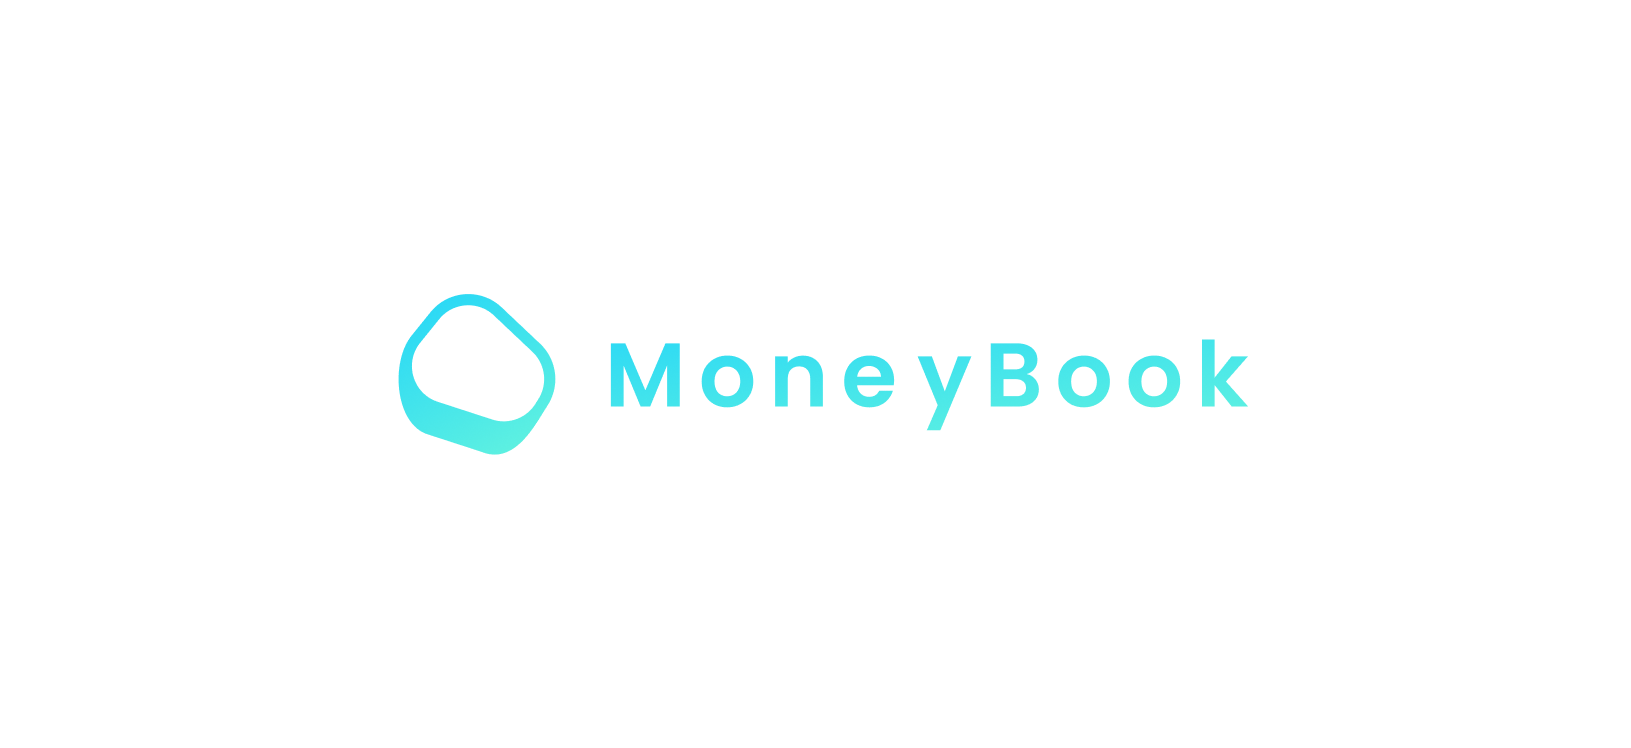 Moneybook logo